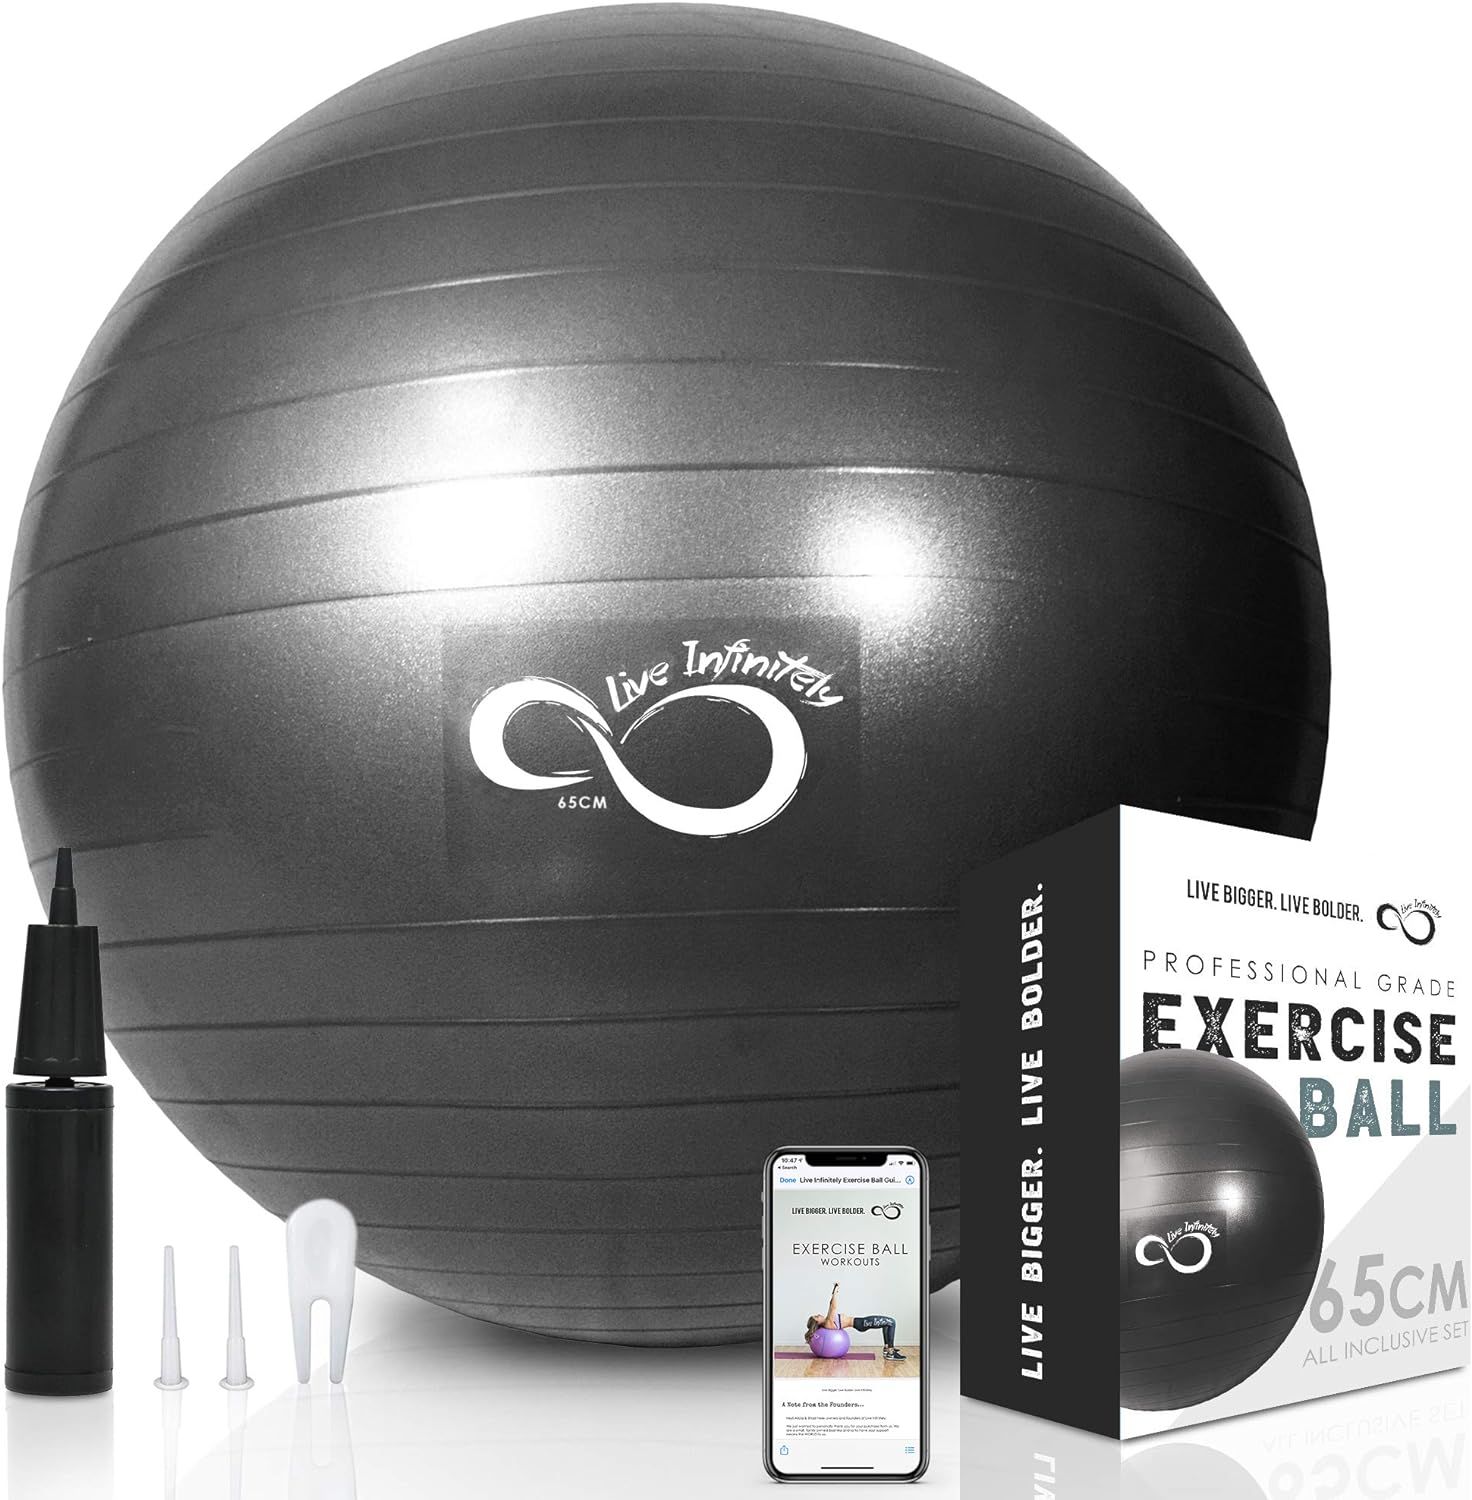 Live Infinitely Exercise Ball (55cm-95cm) Extra Thick Professional Grade Balance & Stability Ball... | Amazon (US)